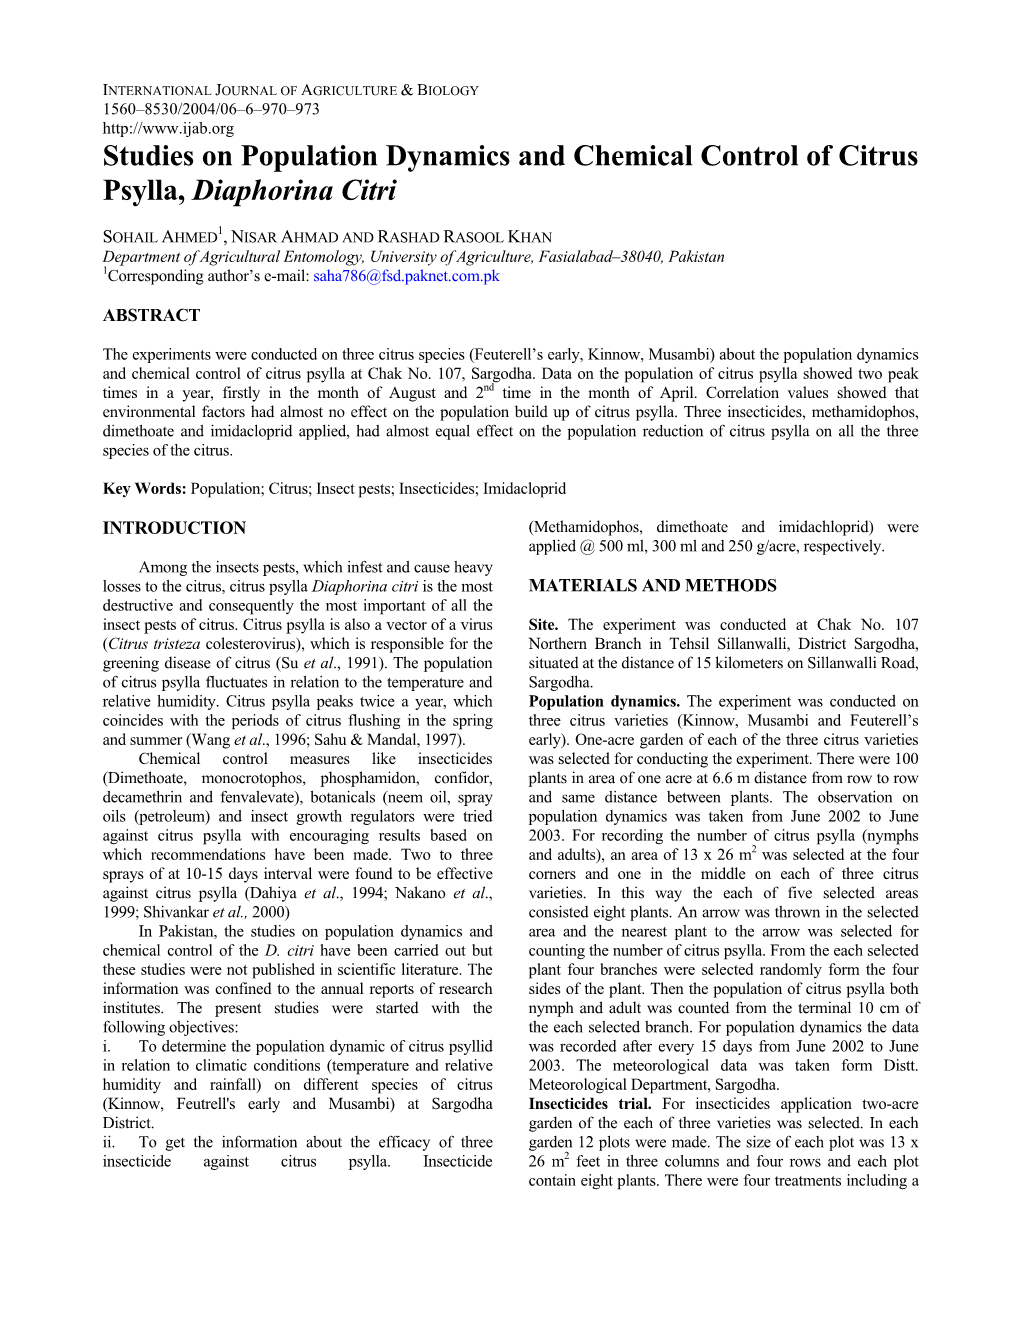 Studies on Population Dynamics and Chemical Control of Citrus Psylla, Diaphorina Citri